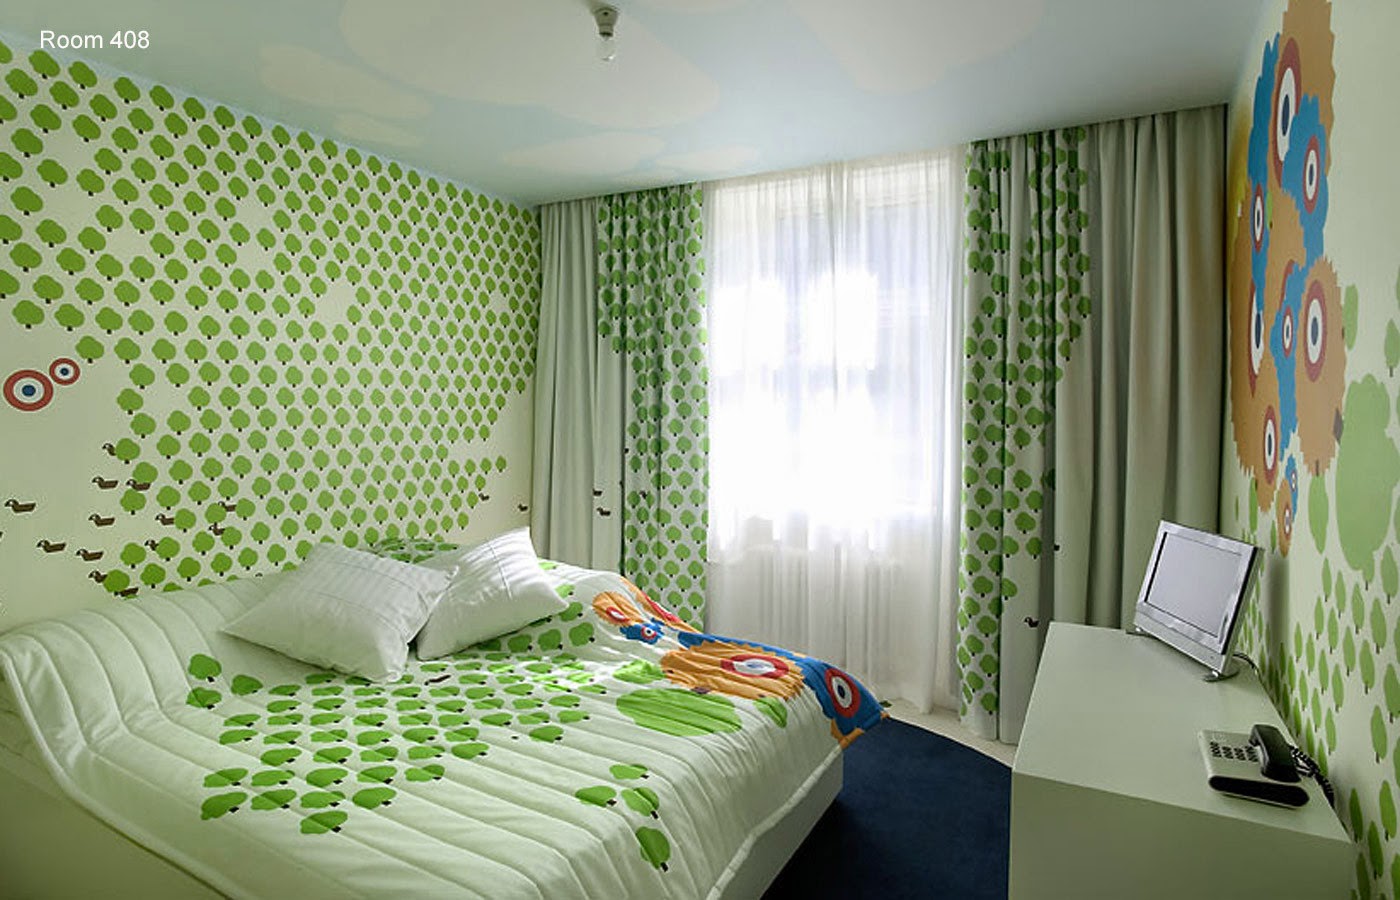 05-Hotel-Fox-Project-Fox-Room Designs-www-designstack-co